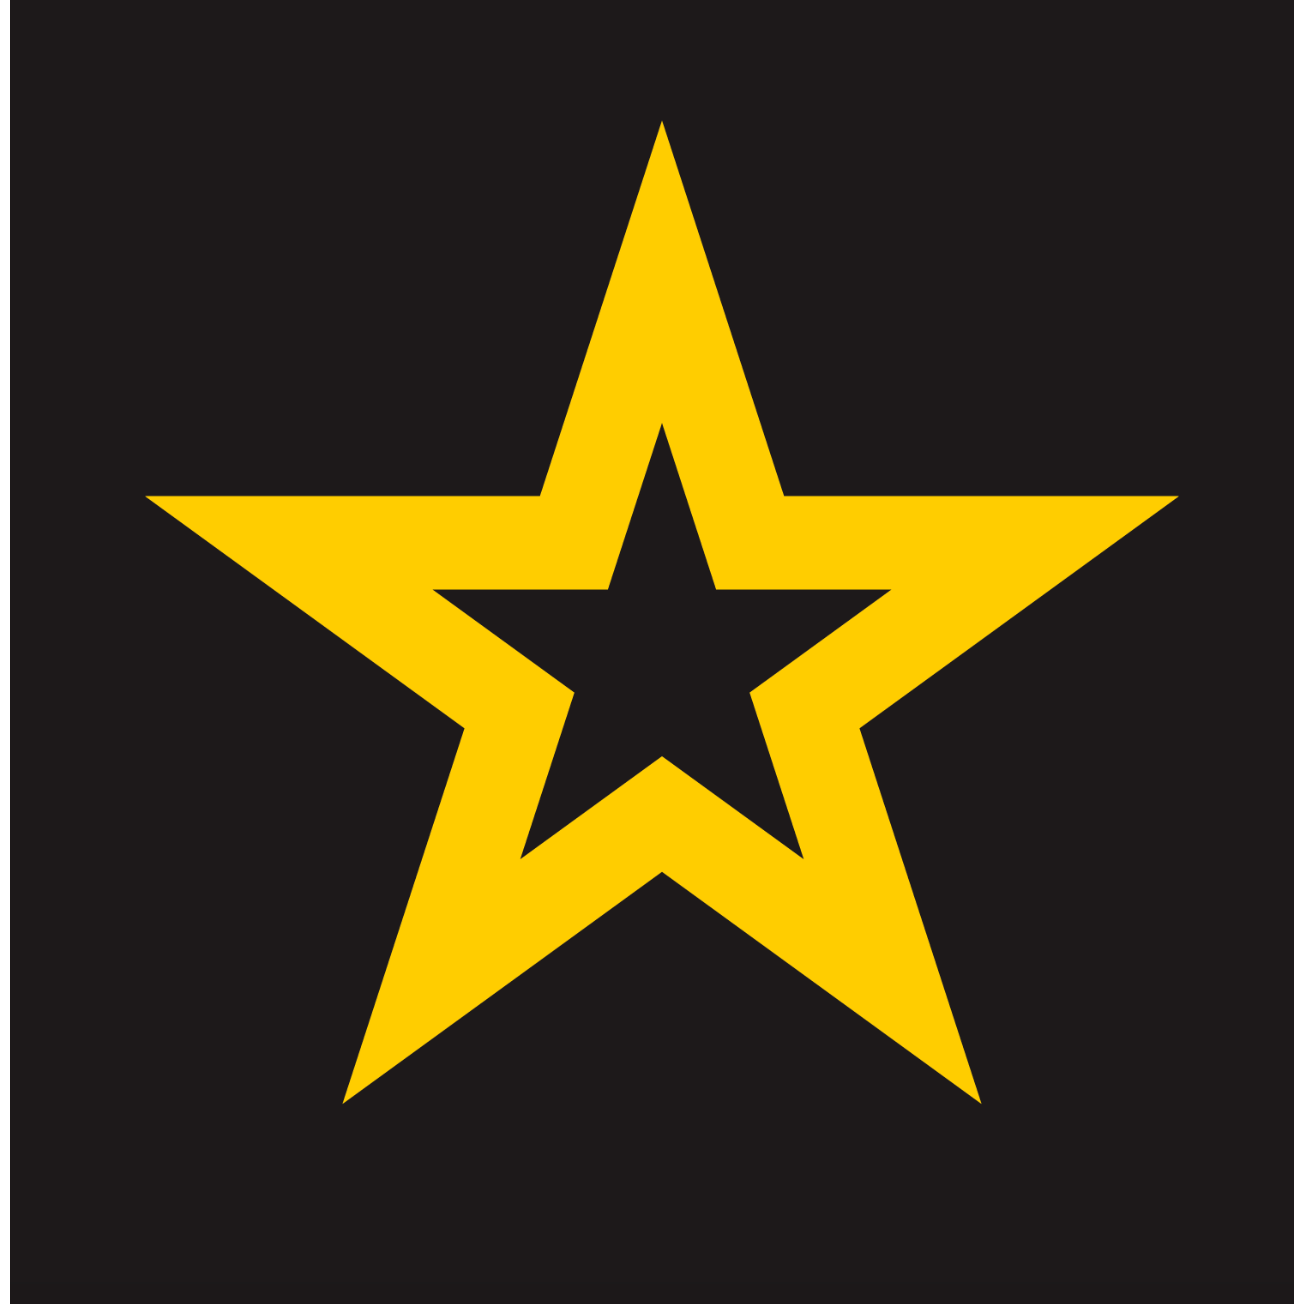 U.S. Army Recruiting Station Southgate